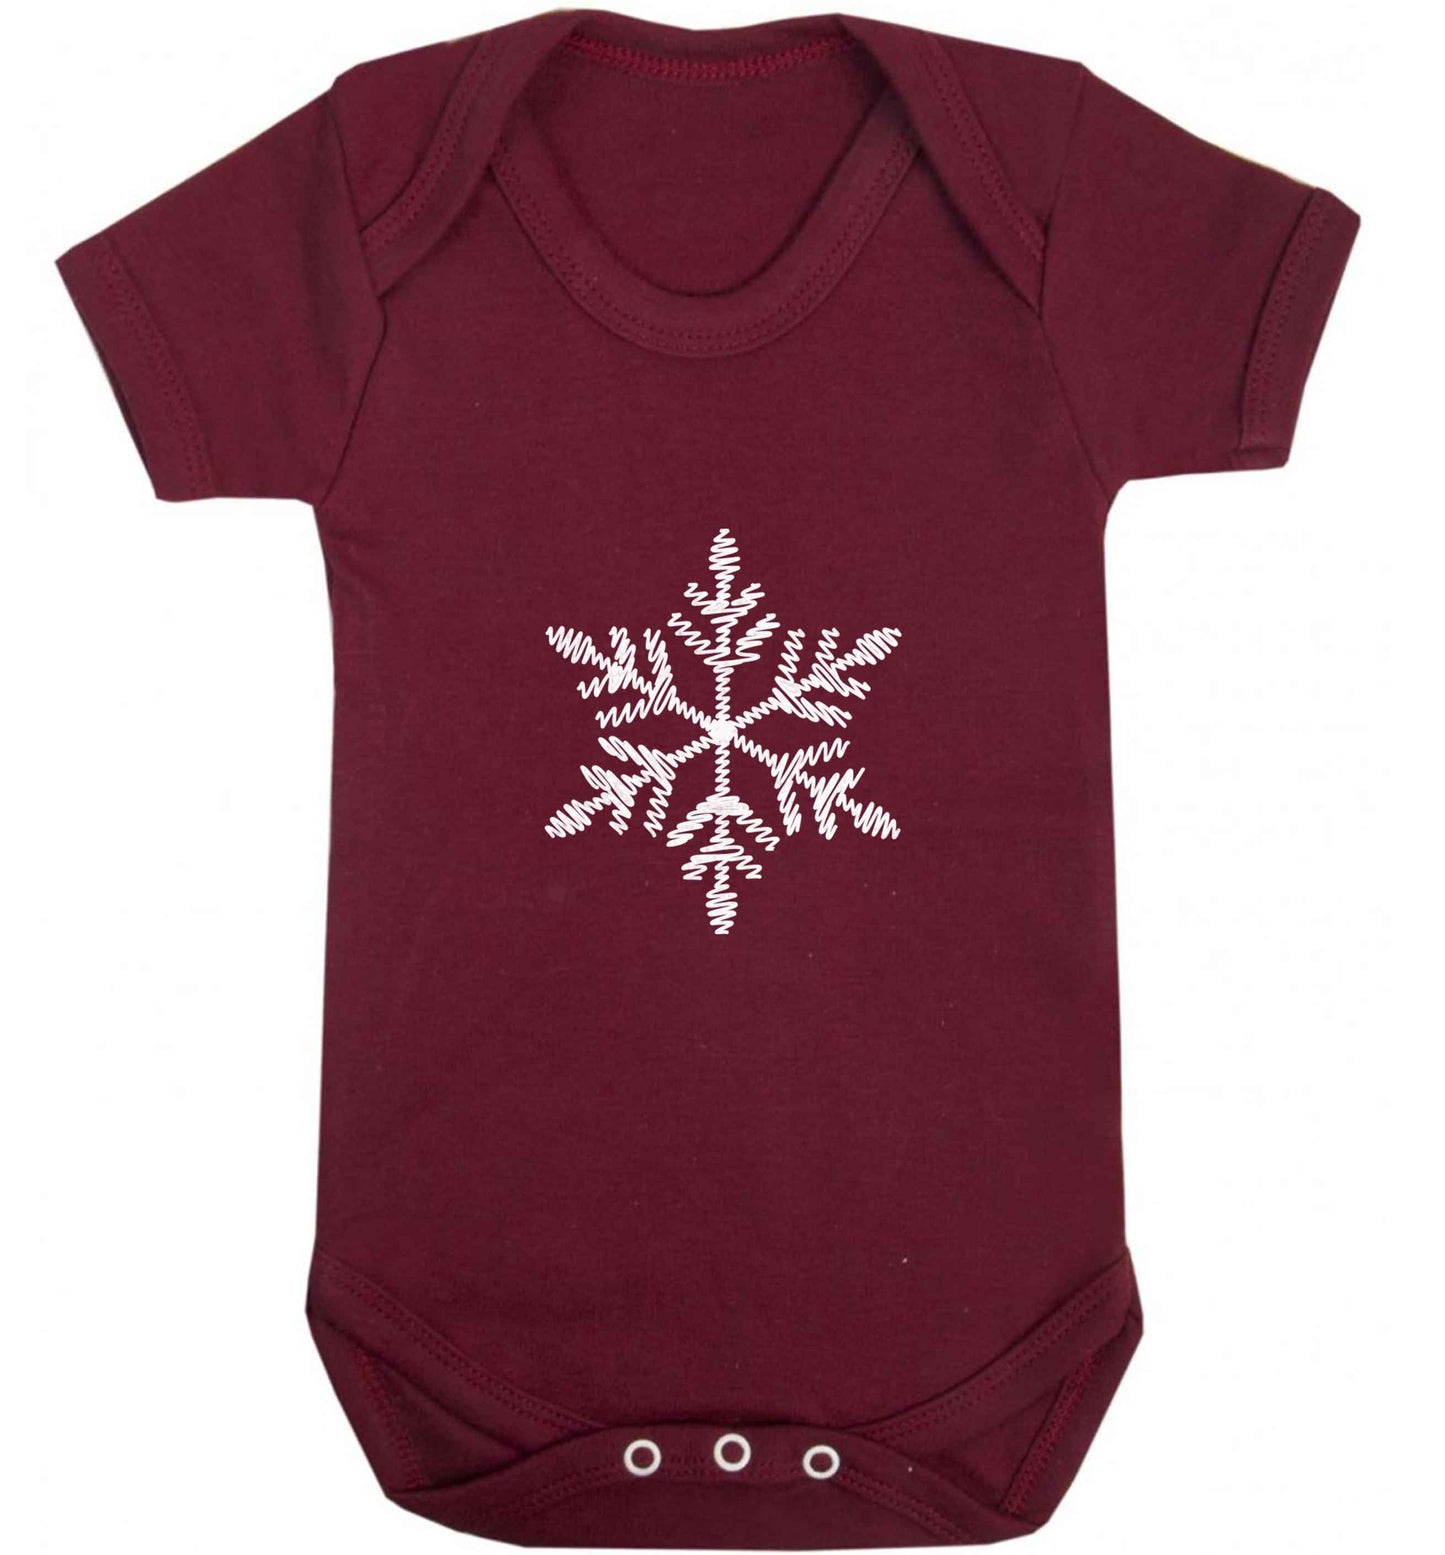 Snowflake baby vest maroon 18-24 months